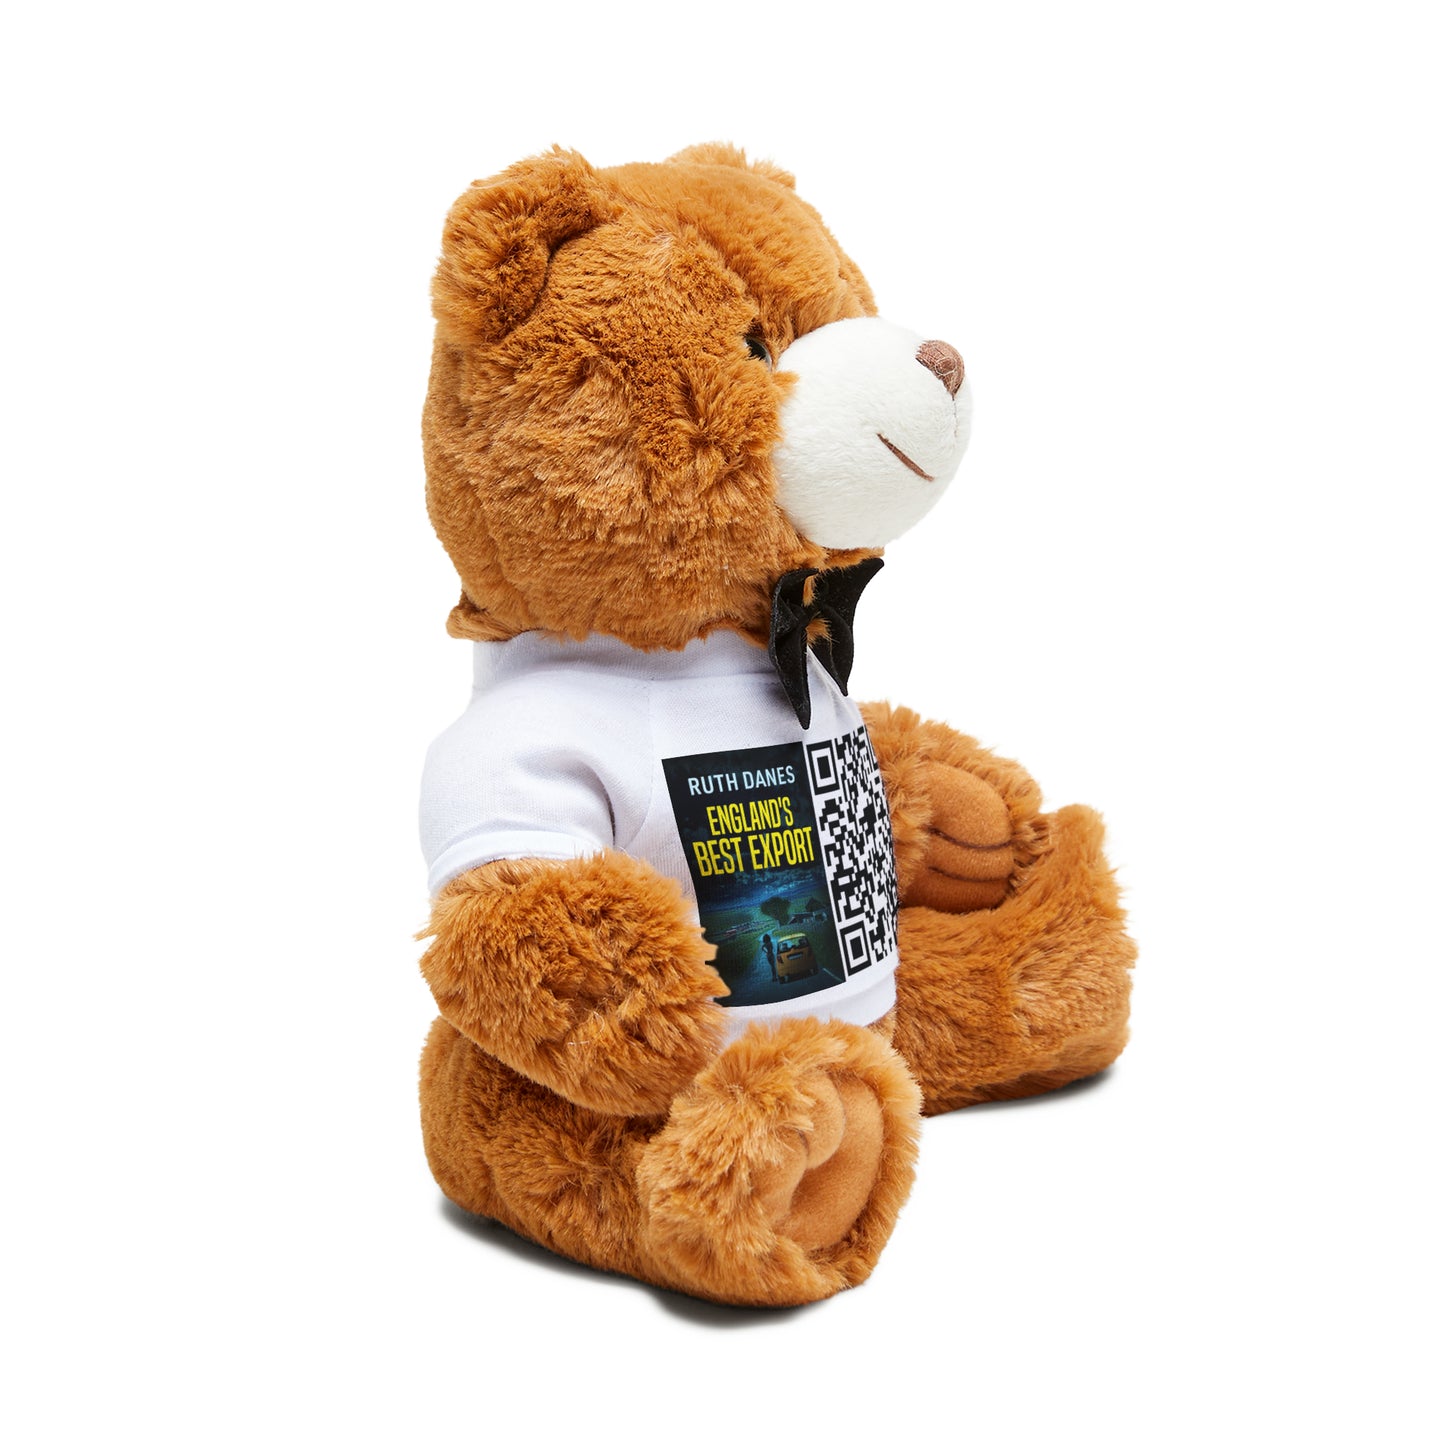 England's Best Export - Teddy Bear